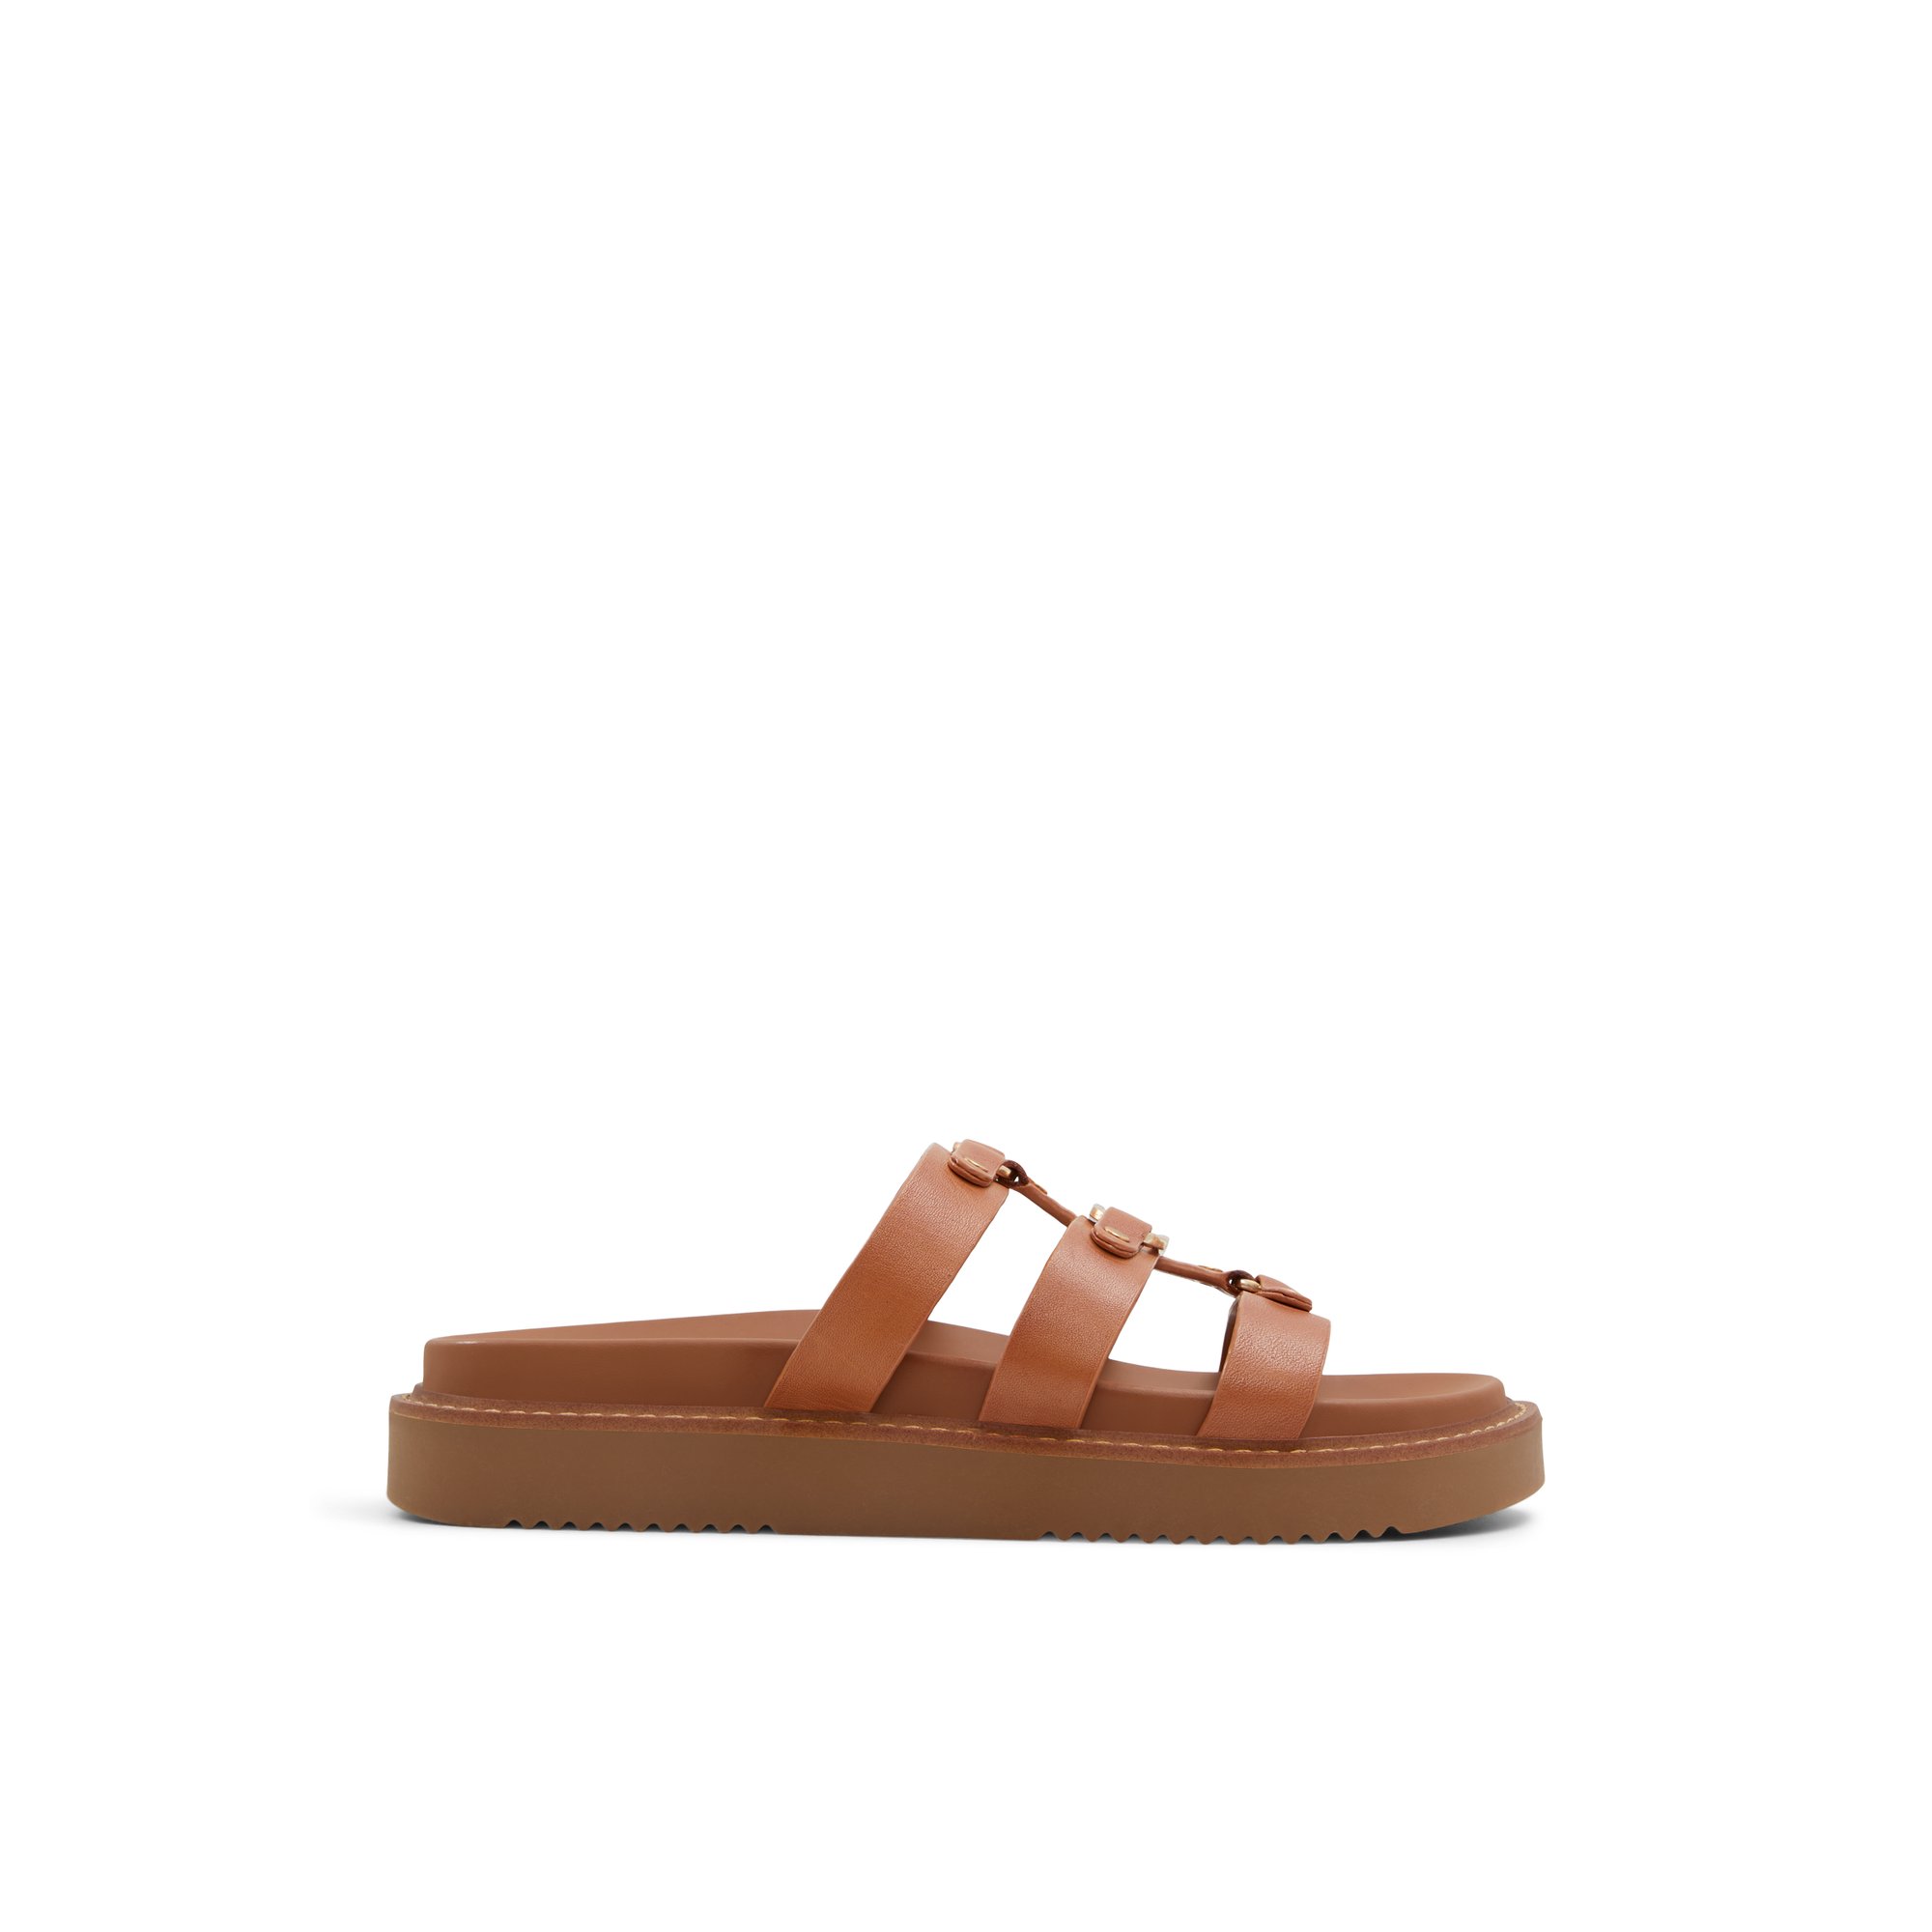 ALDO Mariesoleil - Women's Sandals Flats - Brown